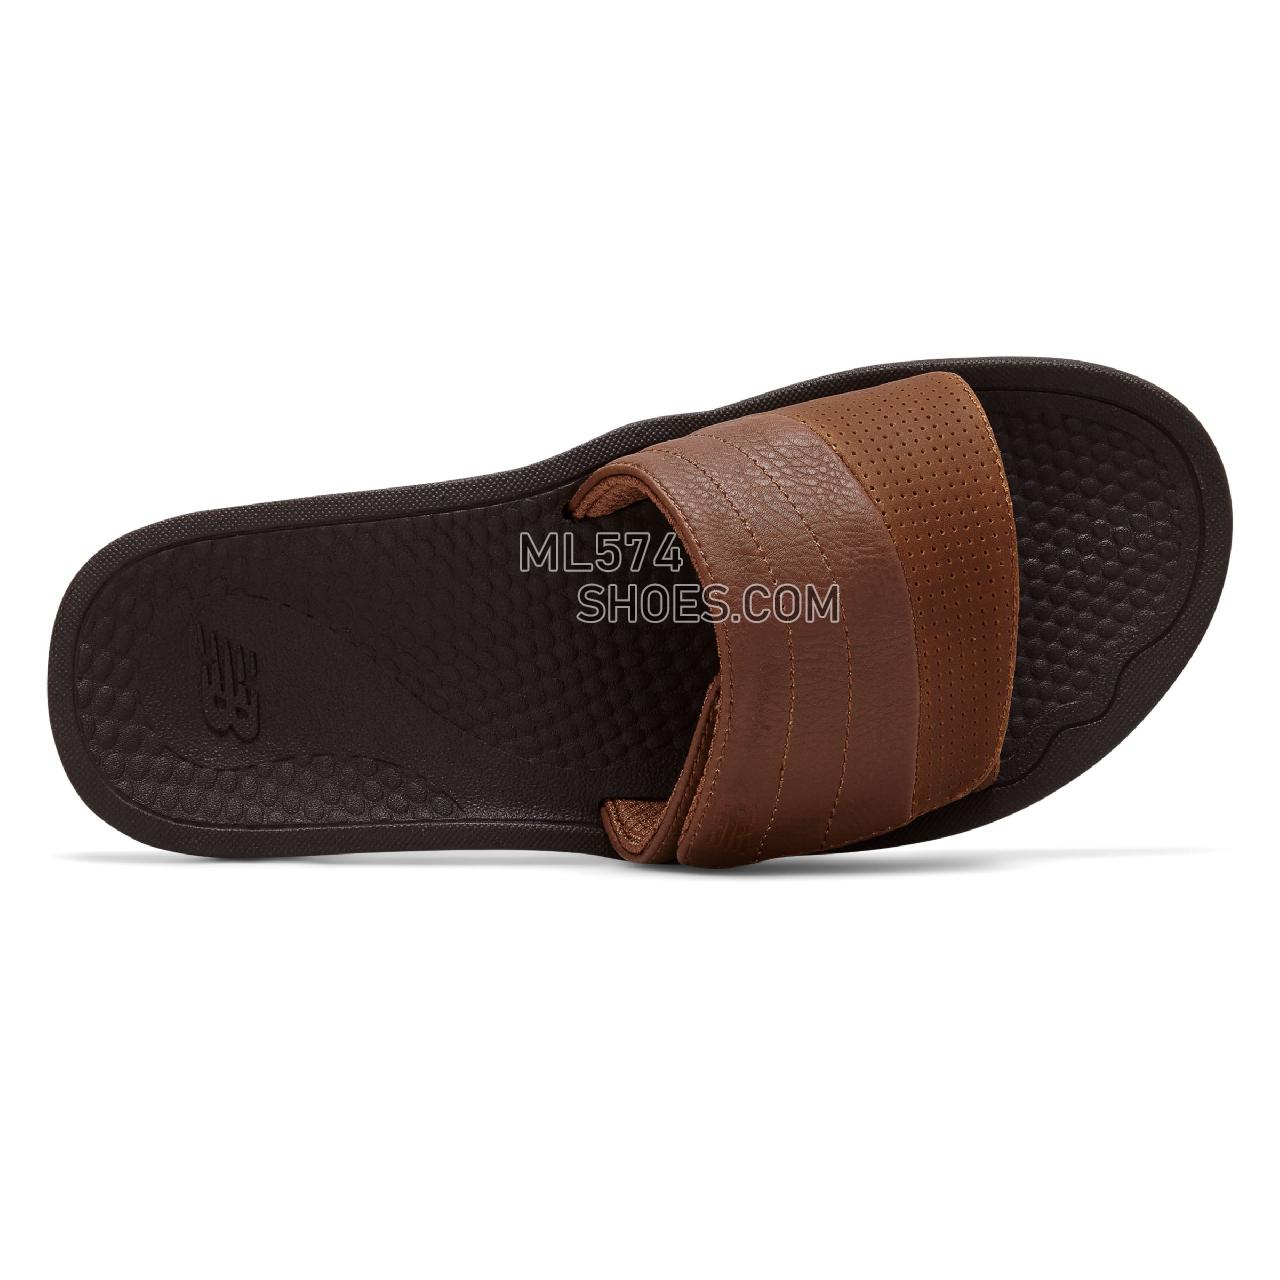 New Balance PureAlign Recharge Slide - Men's 3080 - Sandals Brown - M3080BR